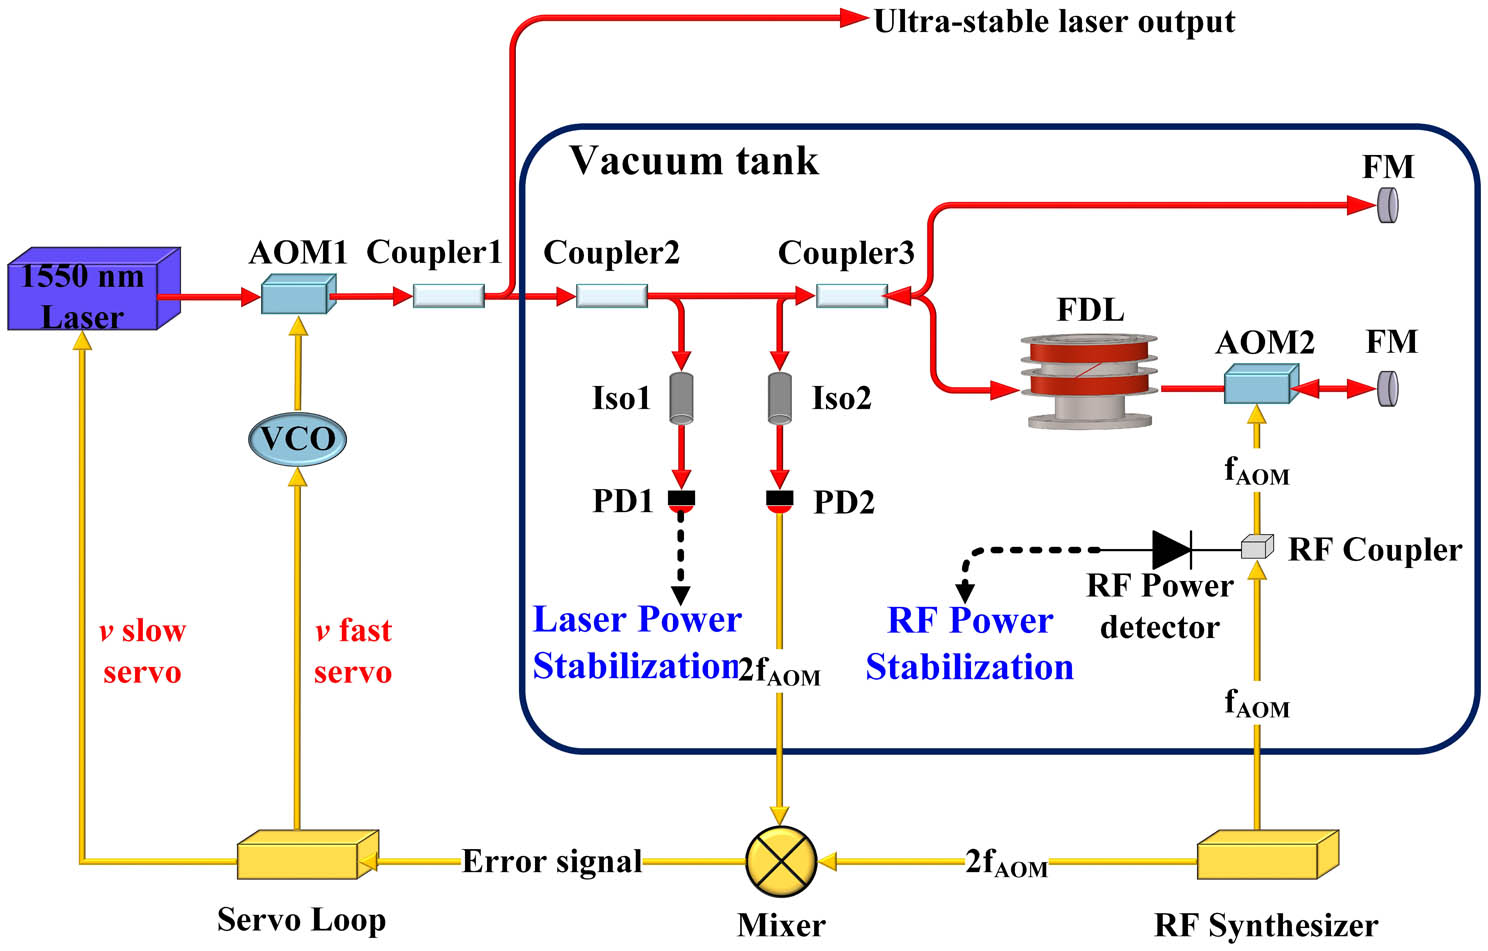 Schematic of the FDL laser frequency stabilization. AOM, acousto-optic modulator; Iso, optical isolator; PD, photodetector; FDL, fiber delay line; FM, Faraday mirror; RF, radio frequency; HMI signal, heterodyne Michelson interferometer signal.